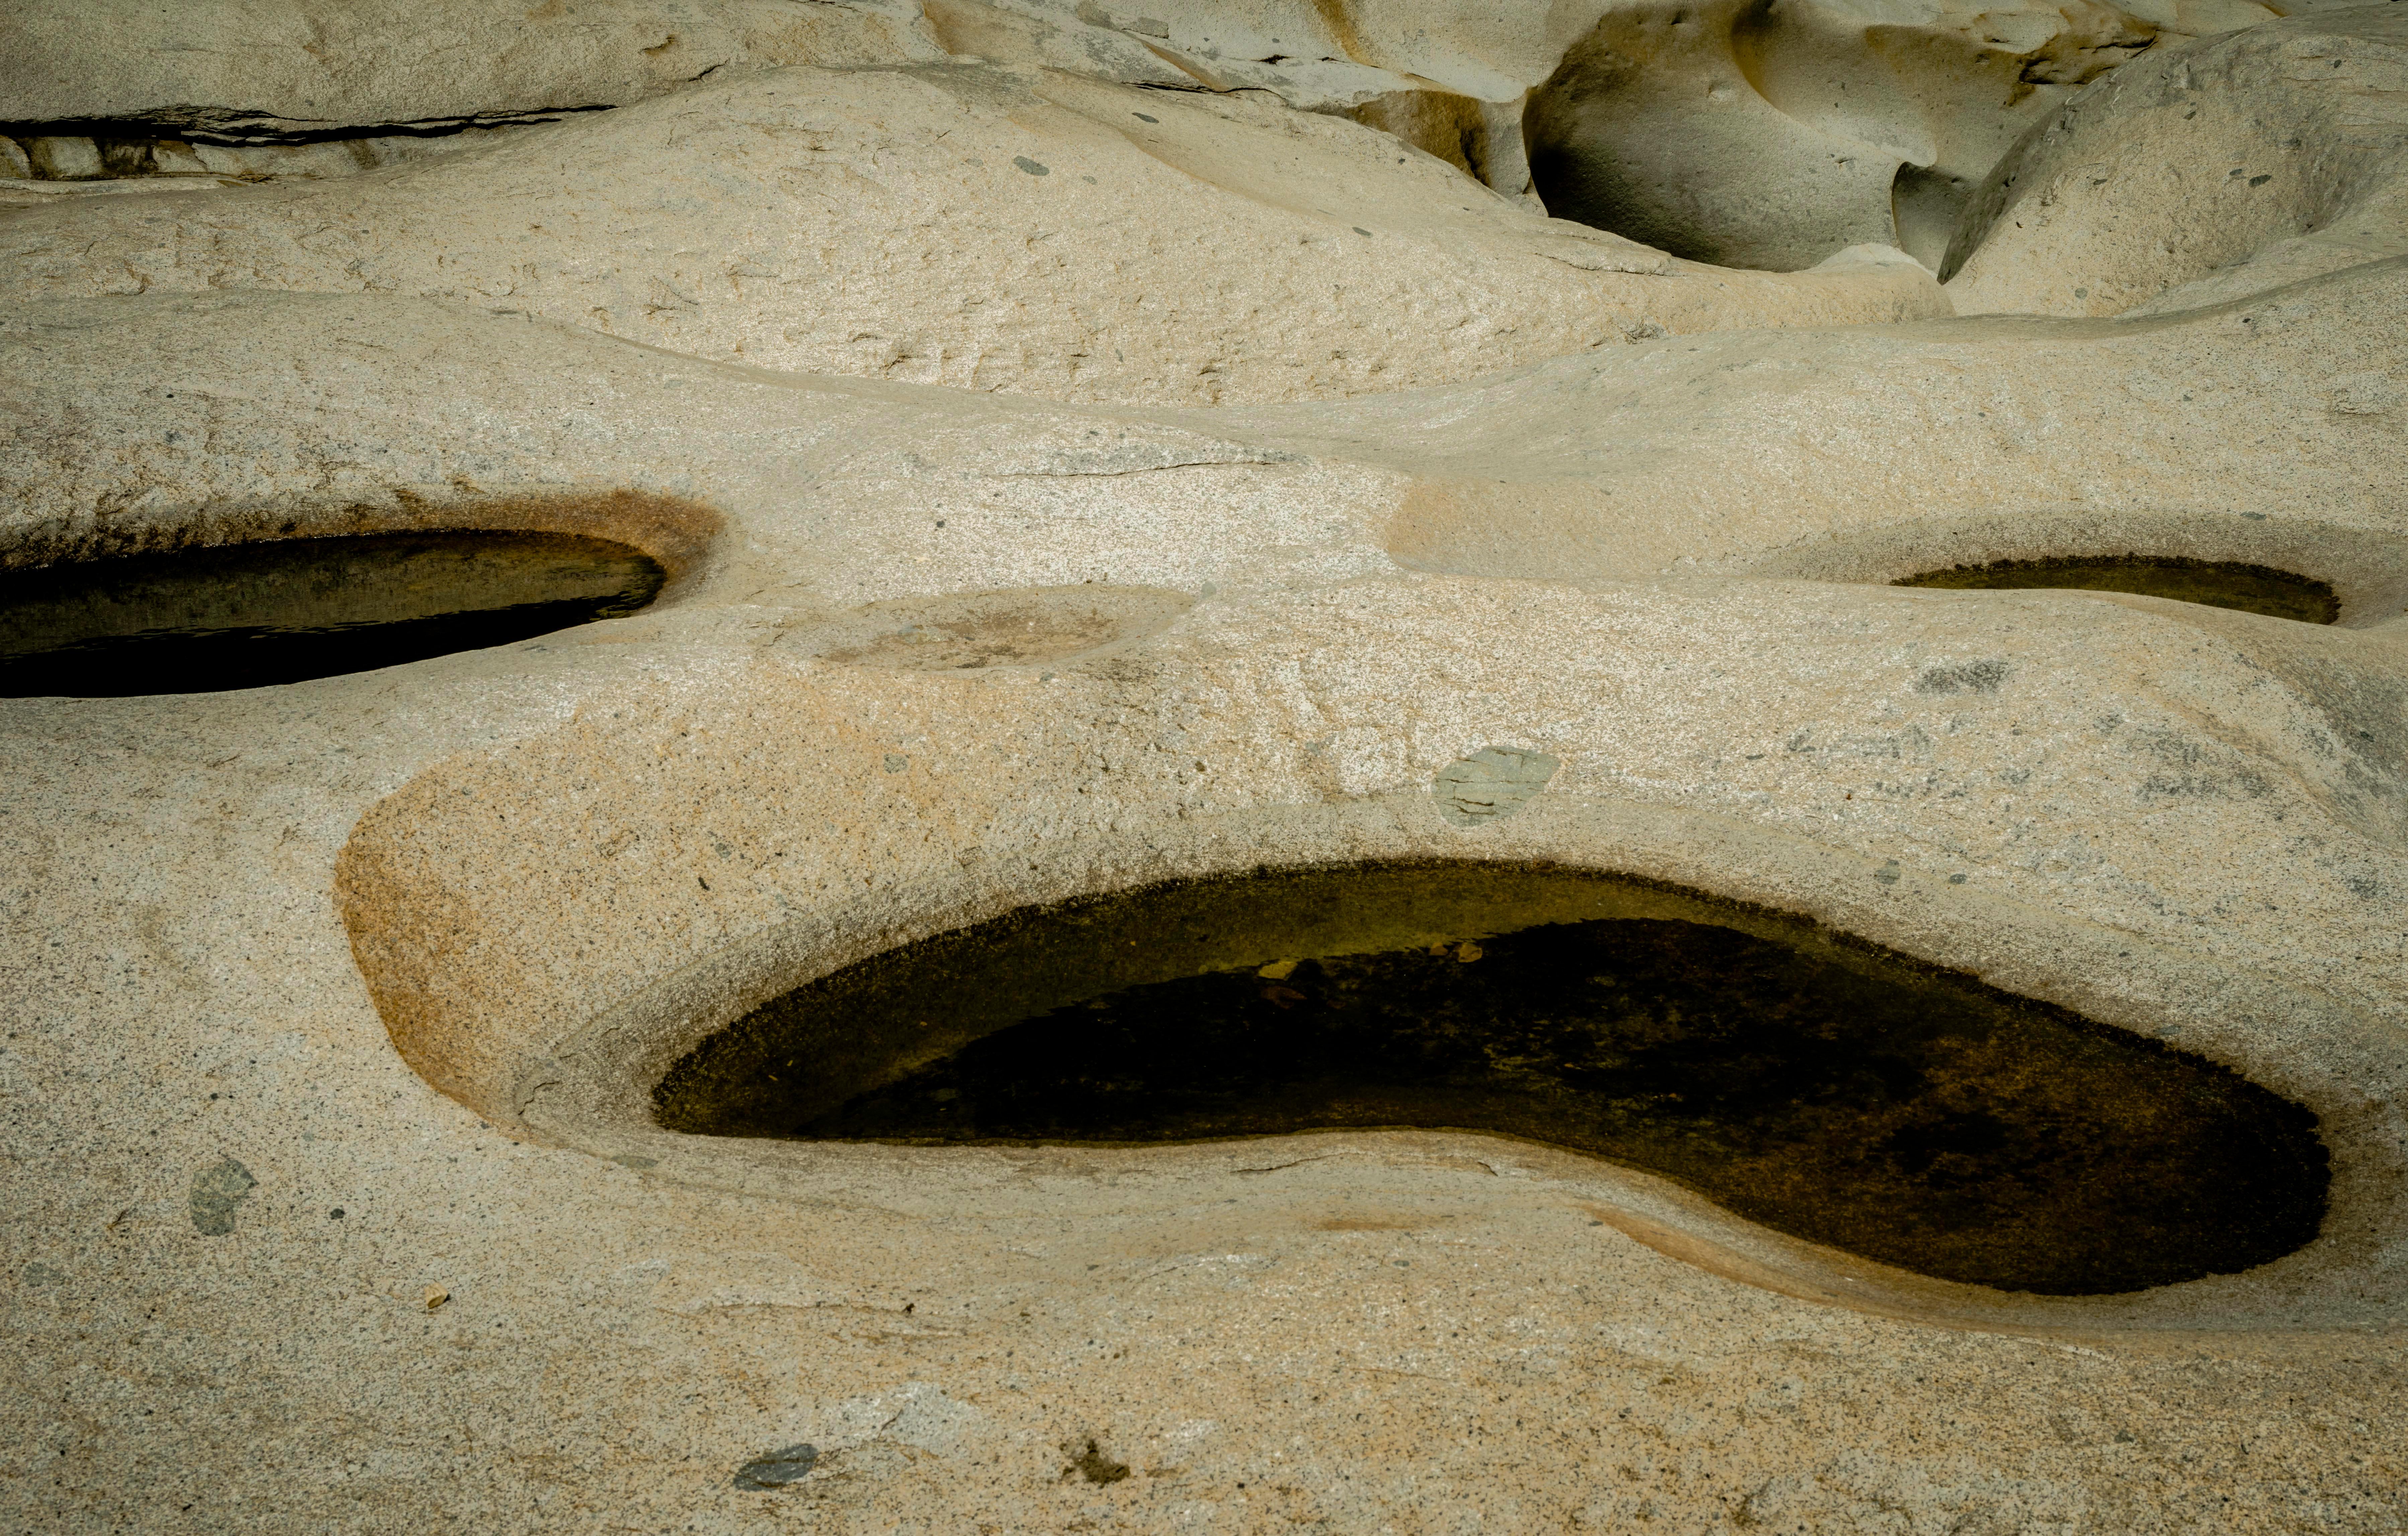 Mauricio Velez Landscape Photograph - Untitled VII, Abstract rocks landscape color limited edition photograph 